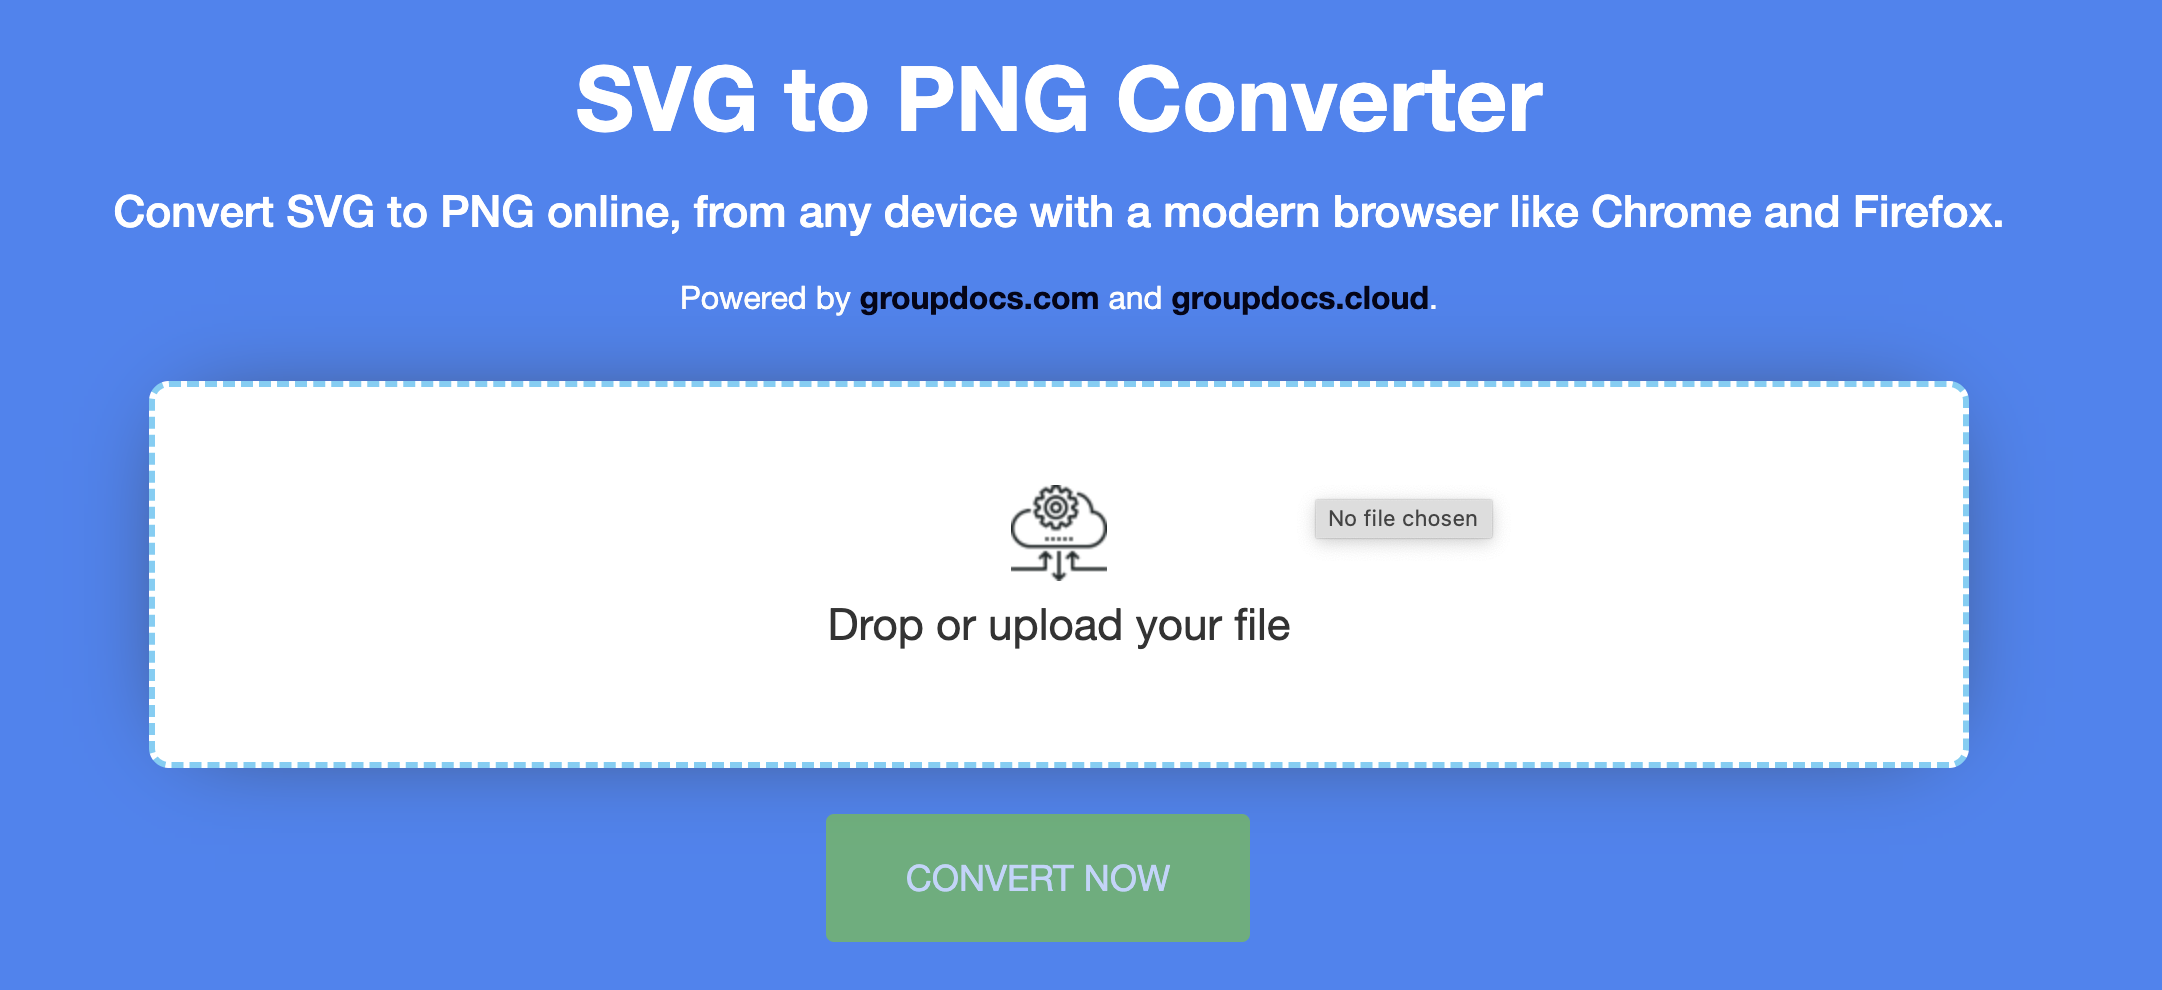 تبدیل SVG به PNG به صورت آنلاین